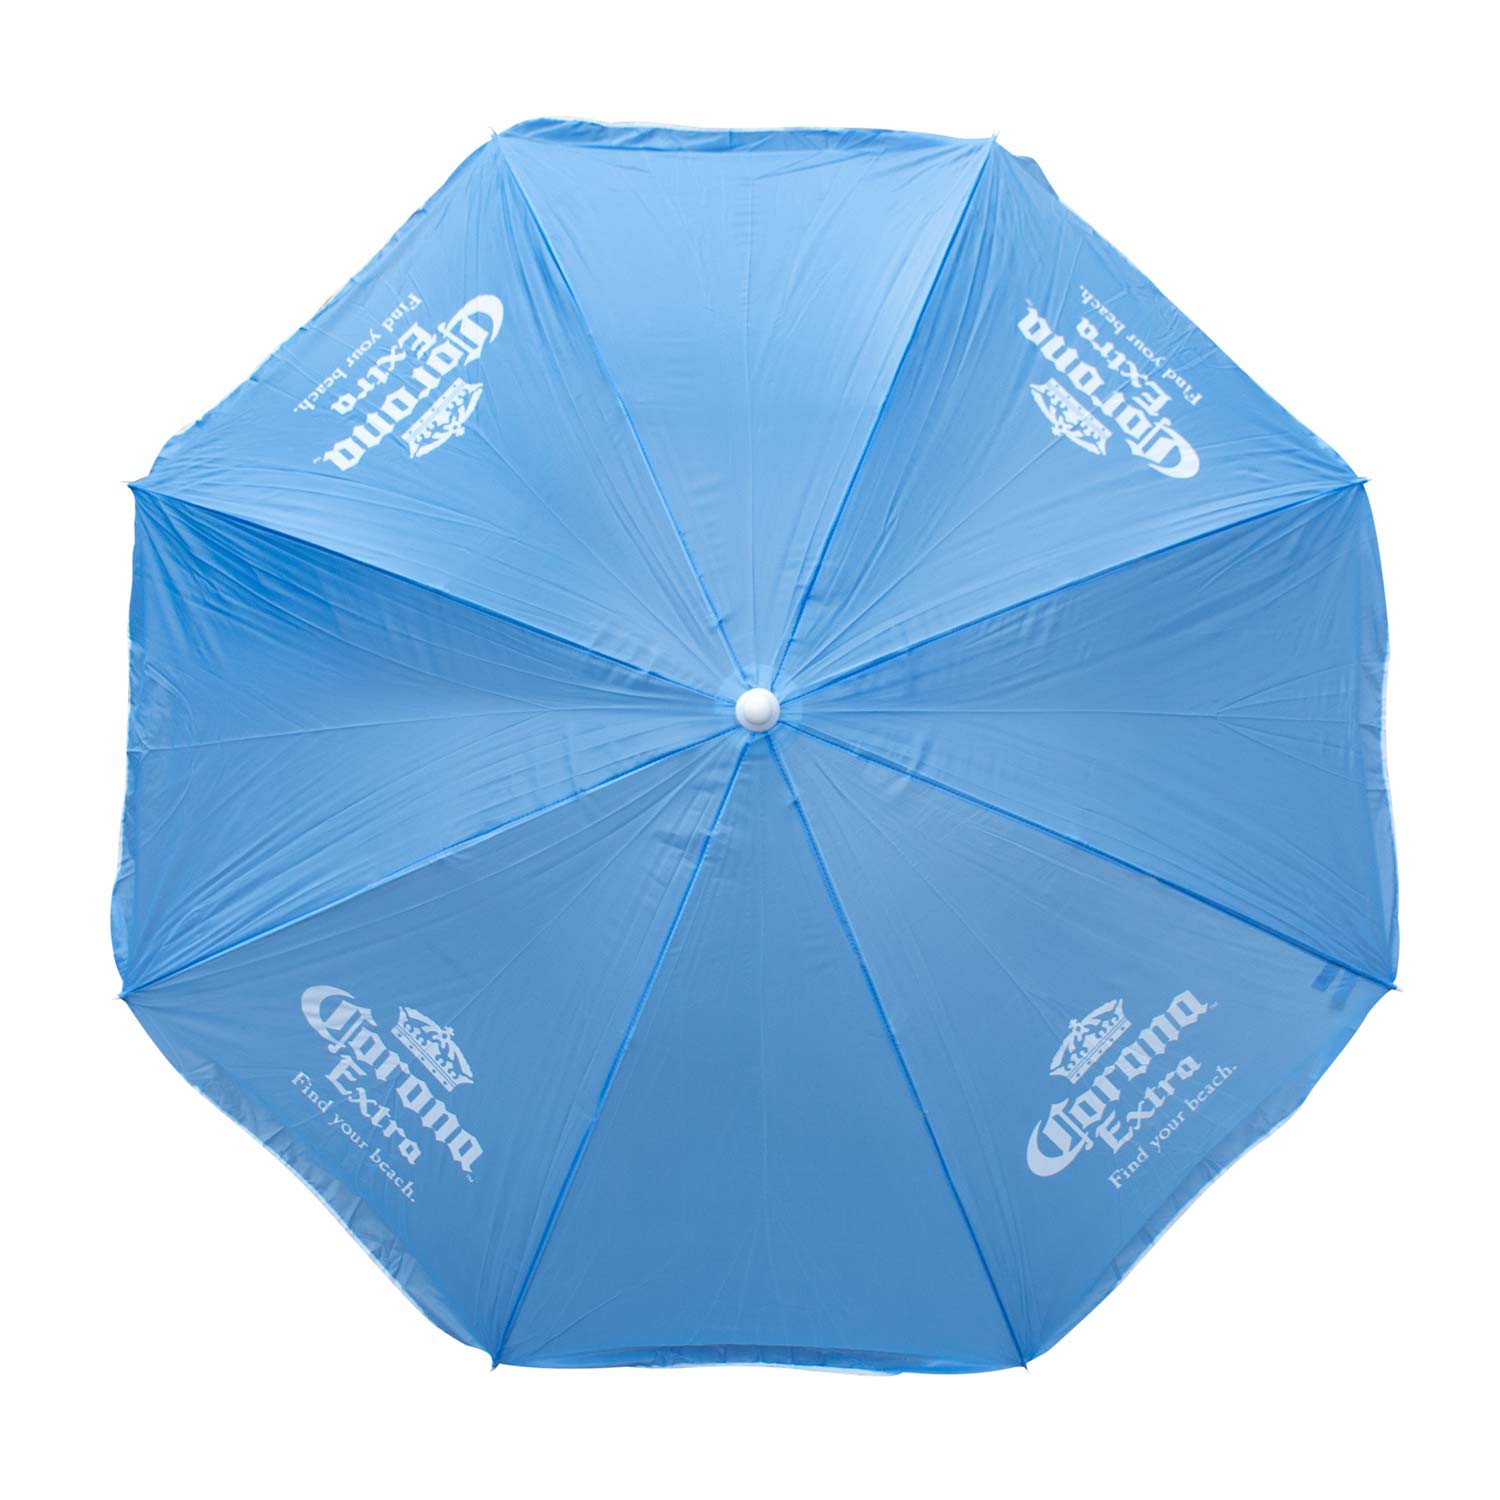 Corona Extra Light Blue Beach Umbrella